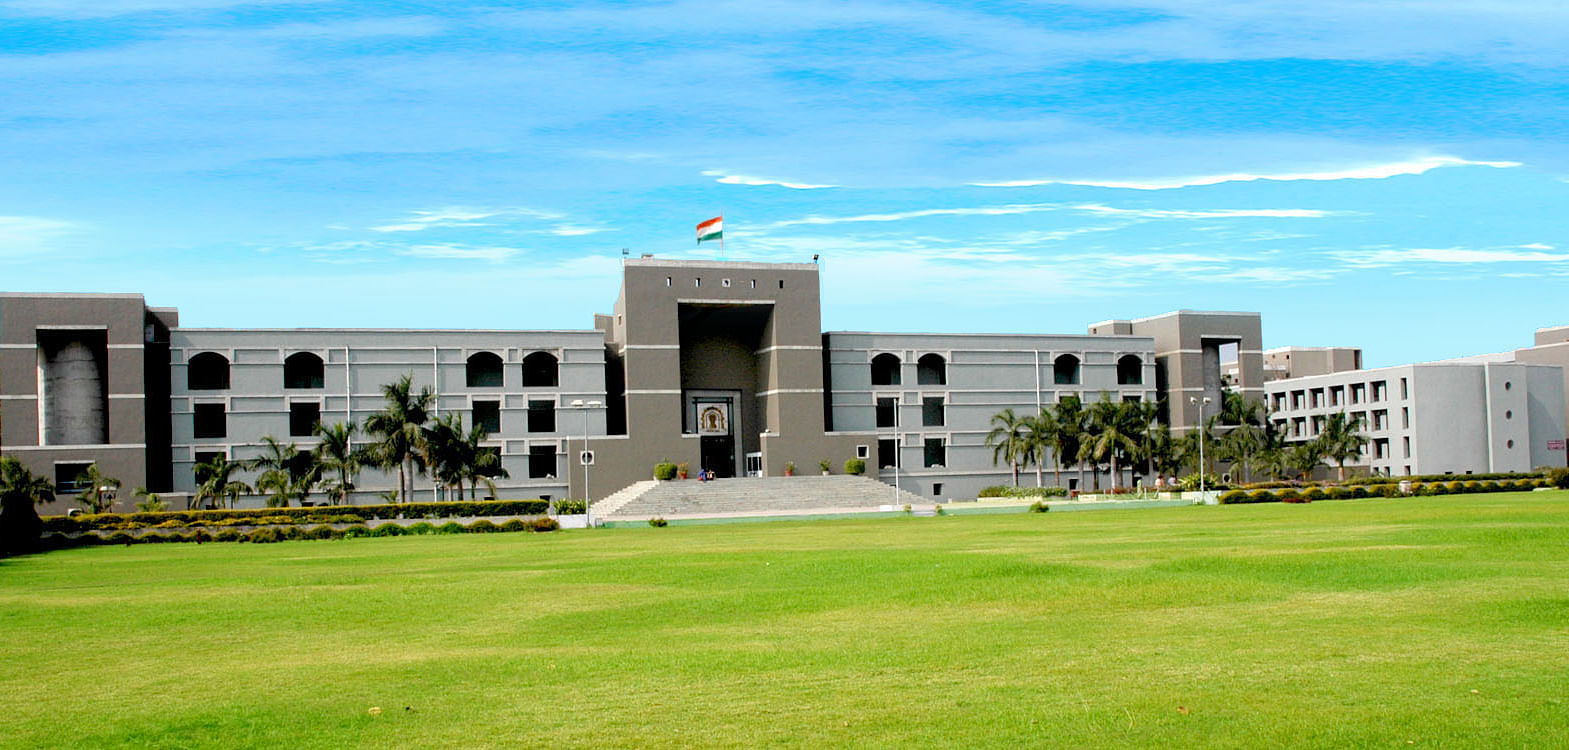  Gujarat High Court. Wiki-Commons. 